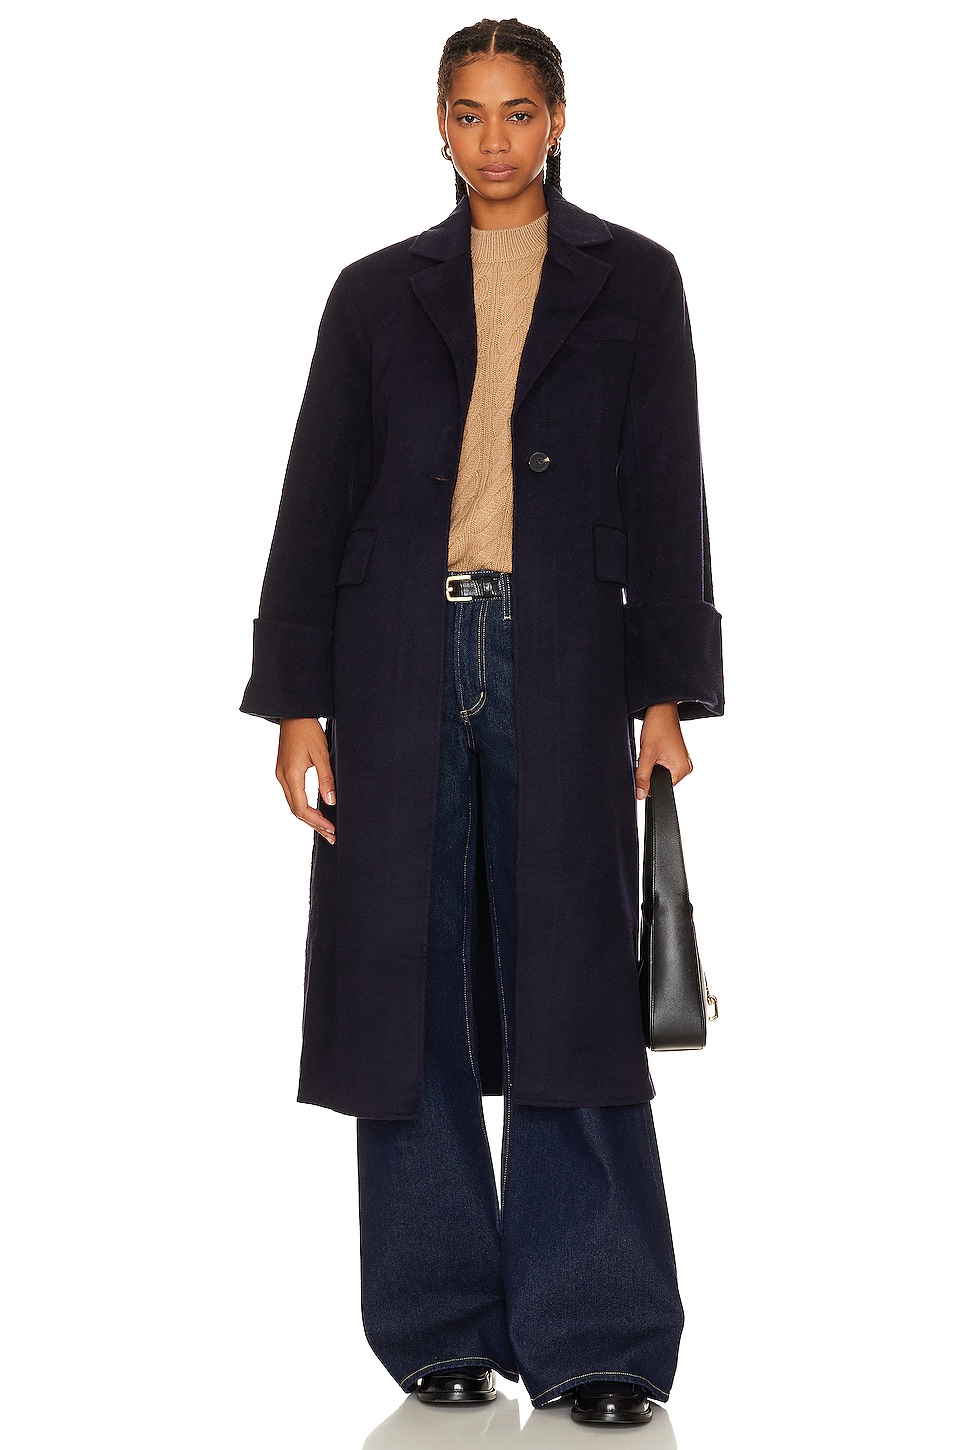 What Coat To Buy This Winter? - Winter Ladies Coats - Jennysgou